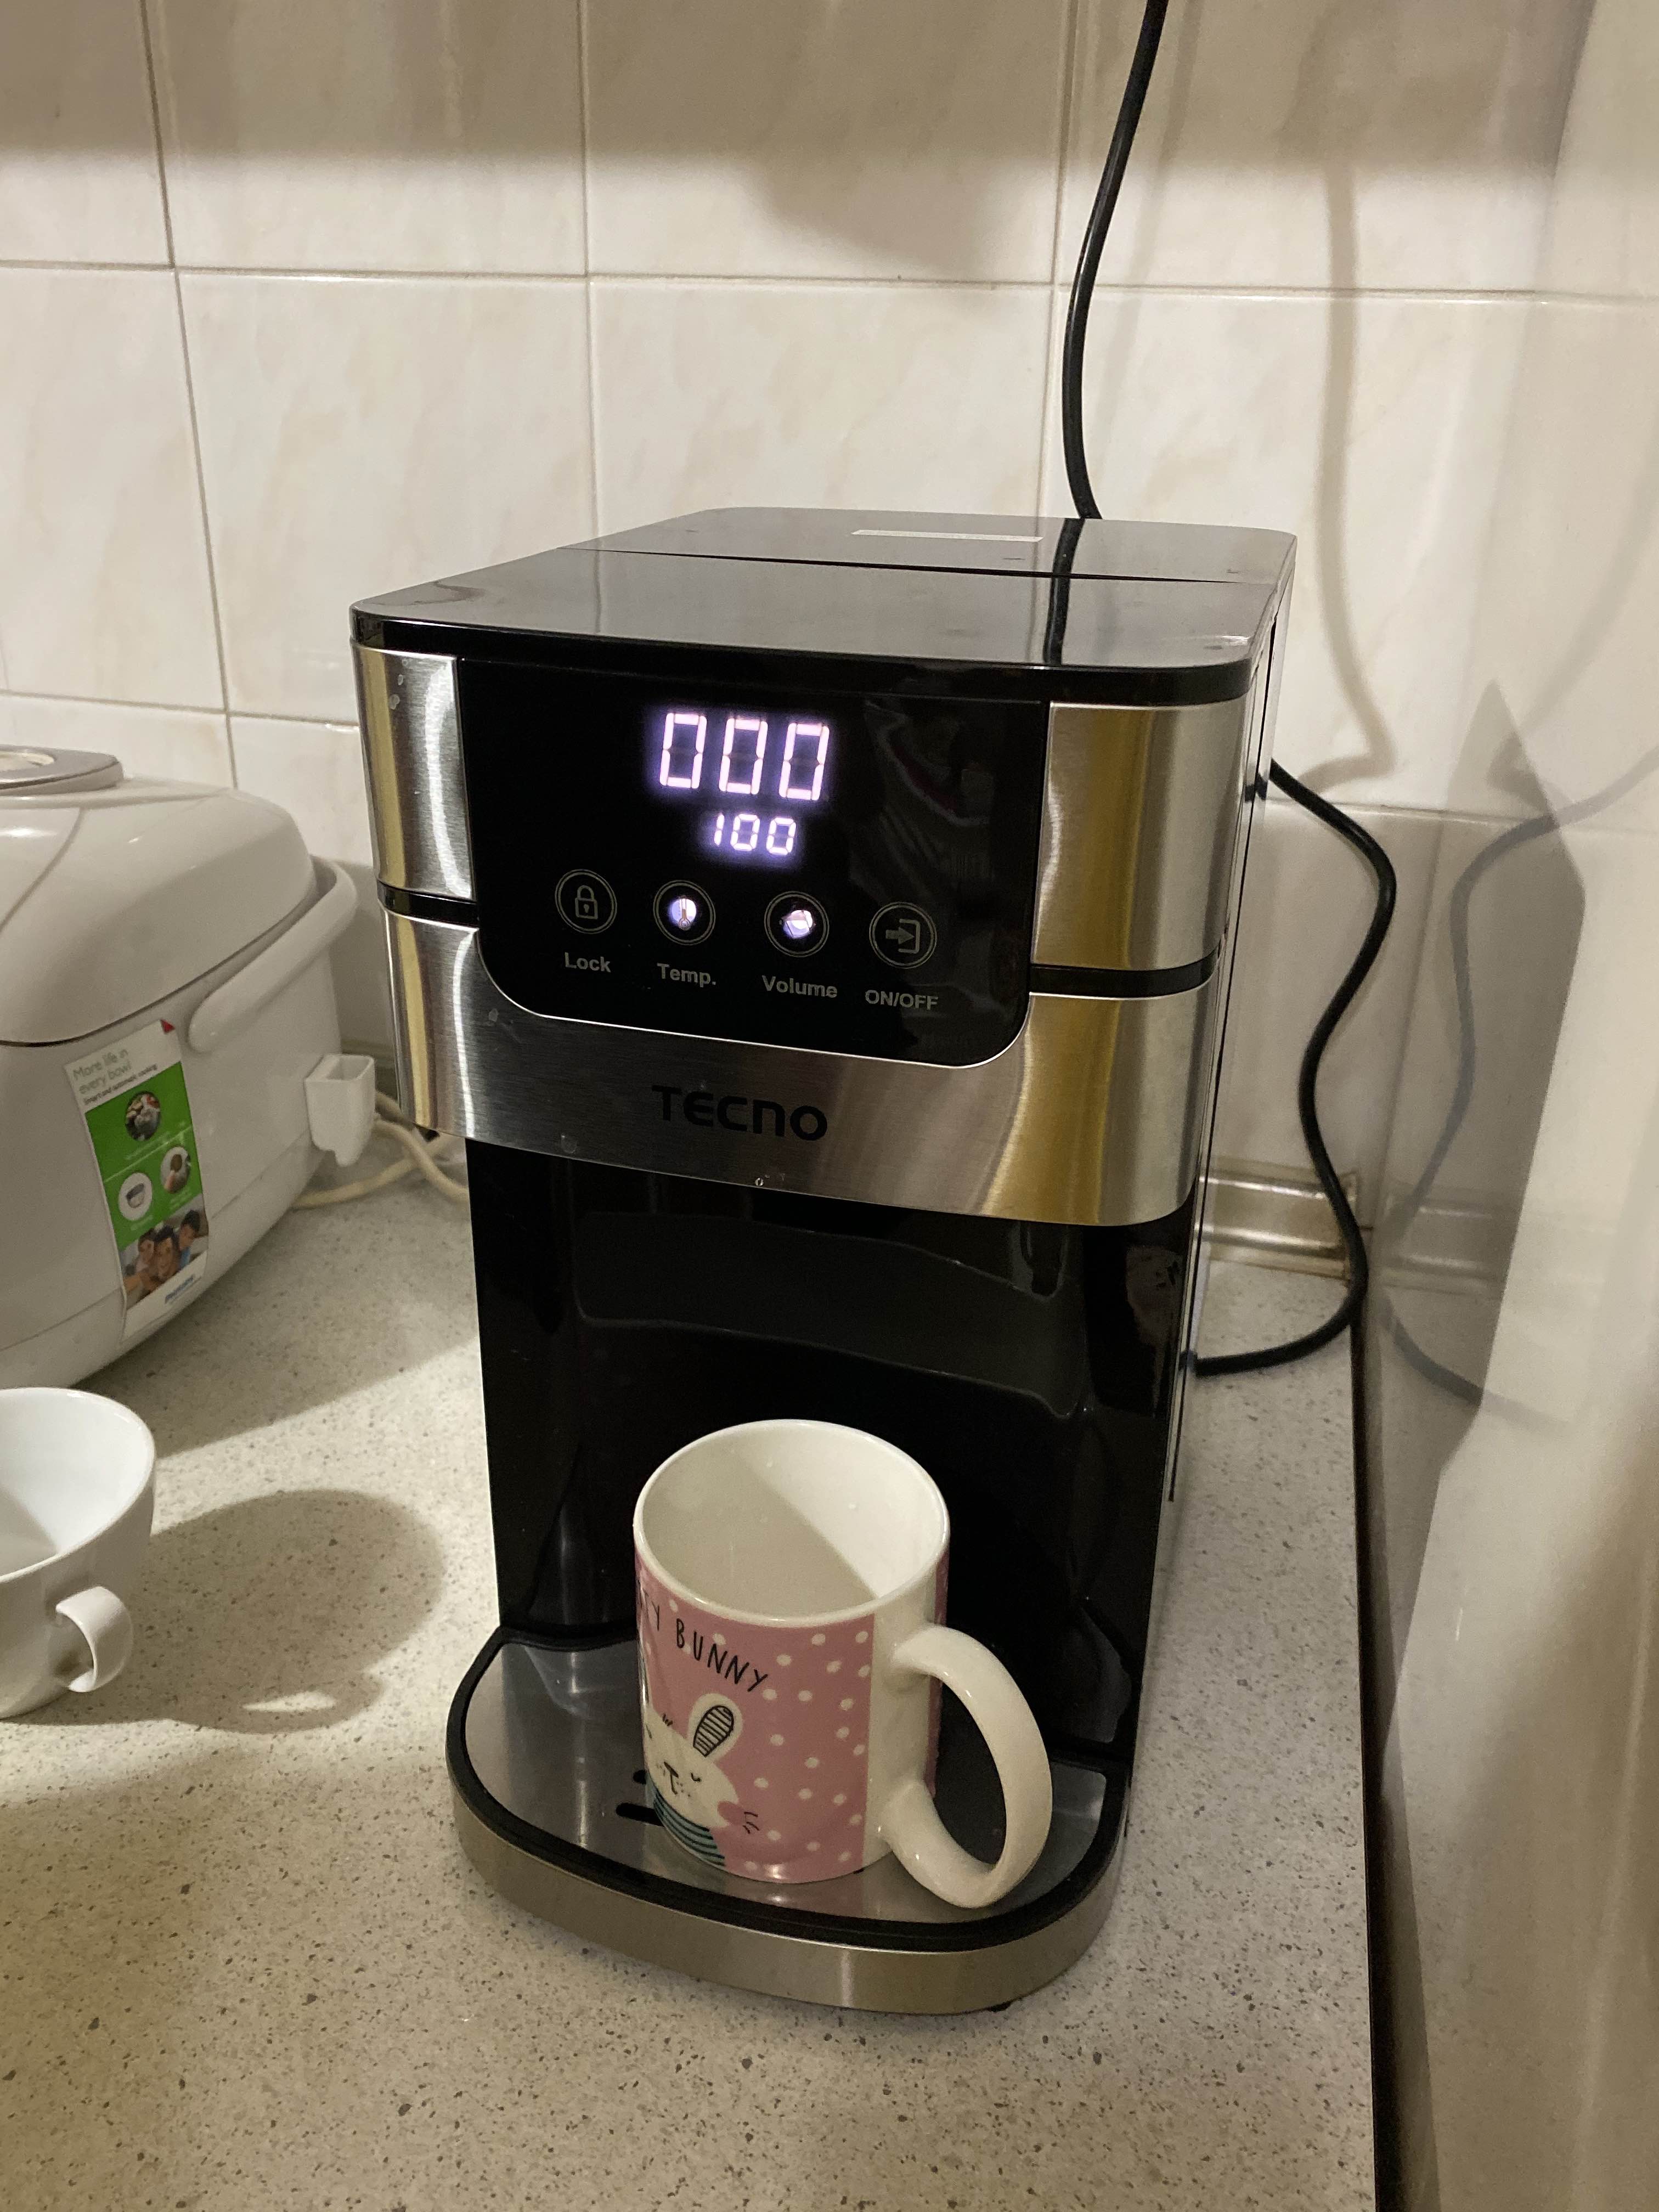 Tecno Instant hot water dispenser with temperature control – Tecno